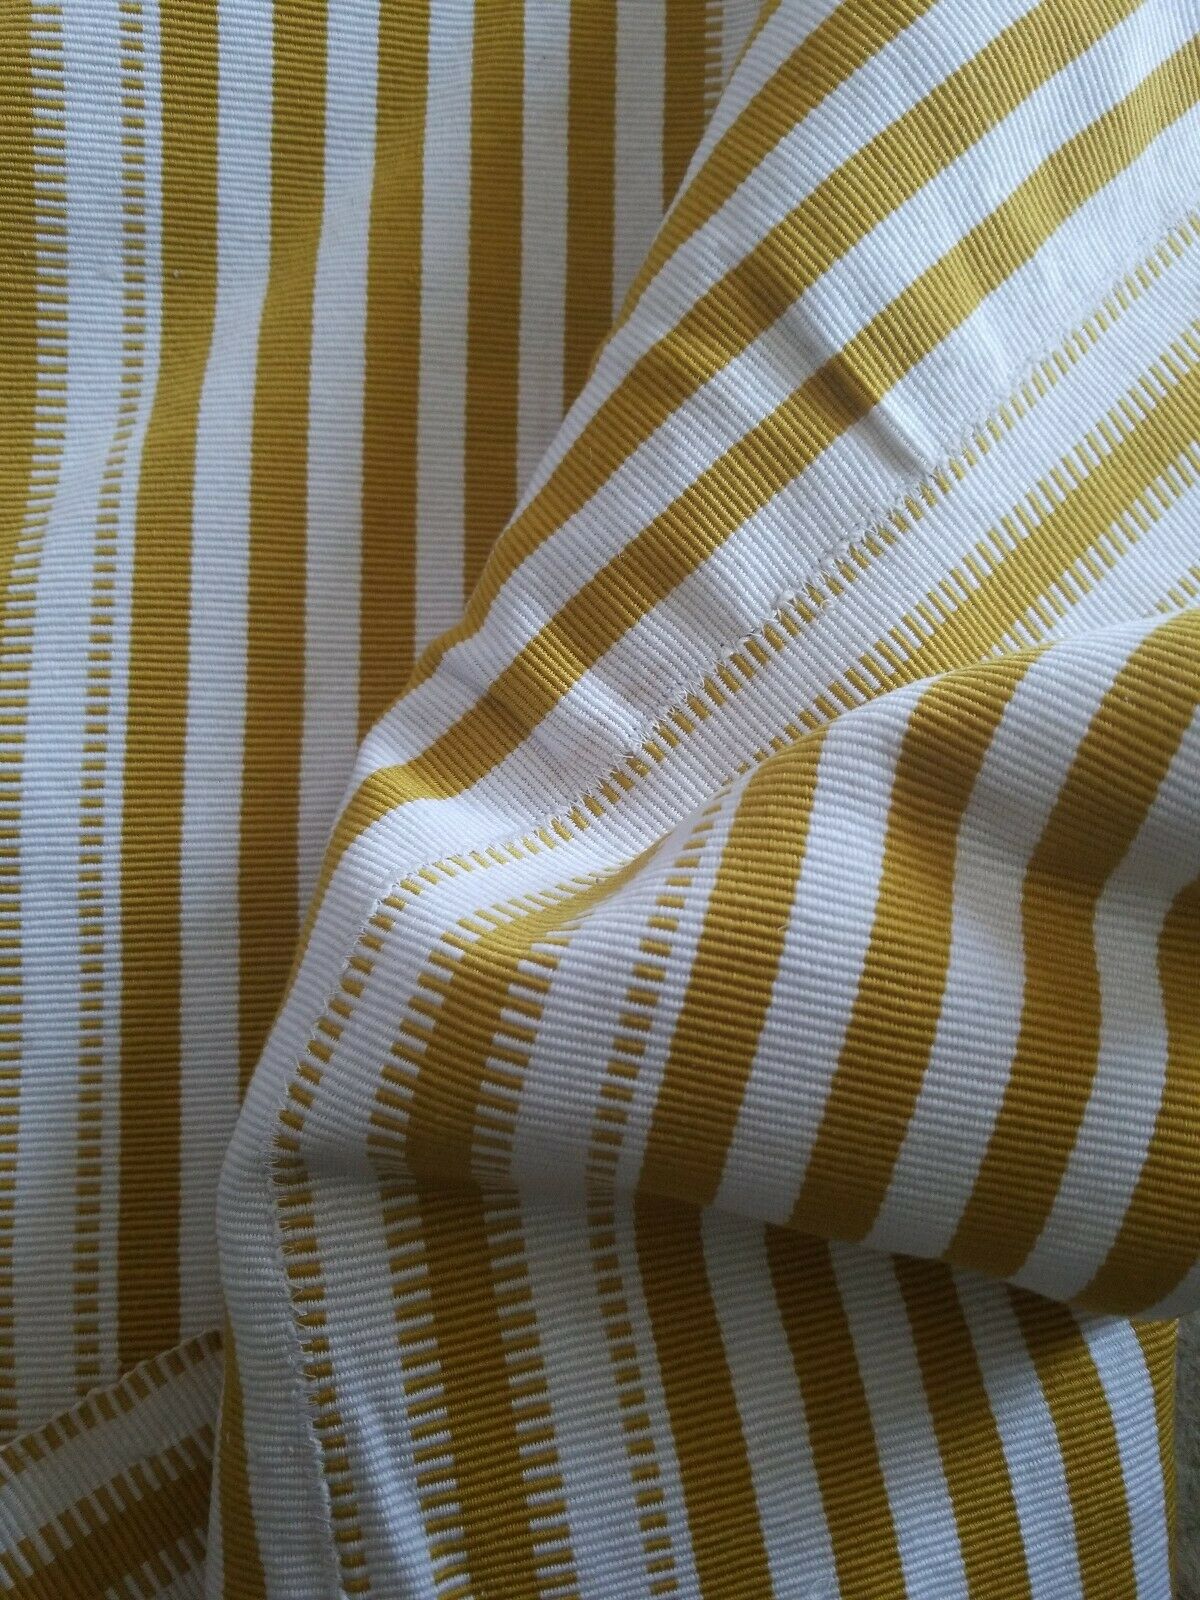 FasoDaFani Fabric From Boukina Faso white &mustard stripes47"×73"